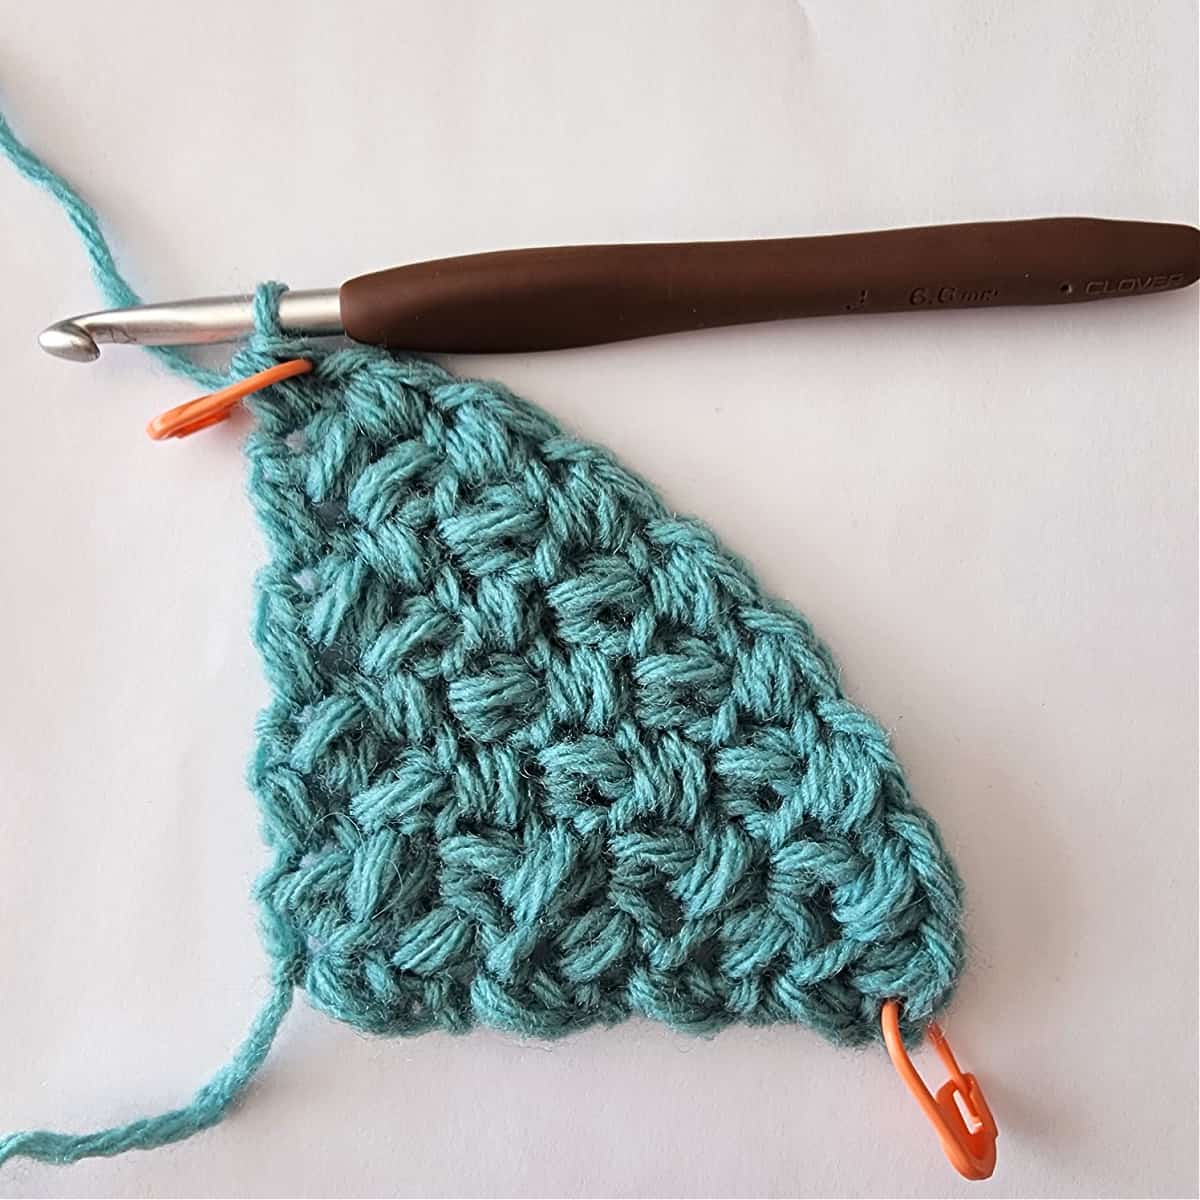 Crochet corner to corner mini bean stitch triangle swatch with eight rows.